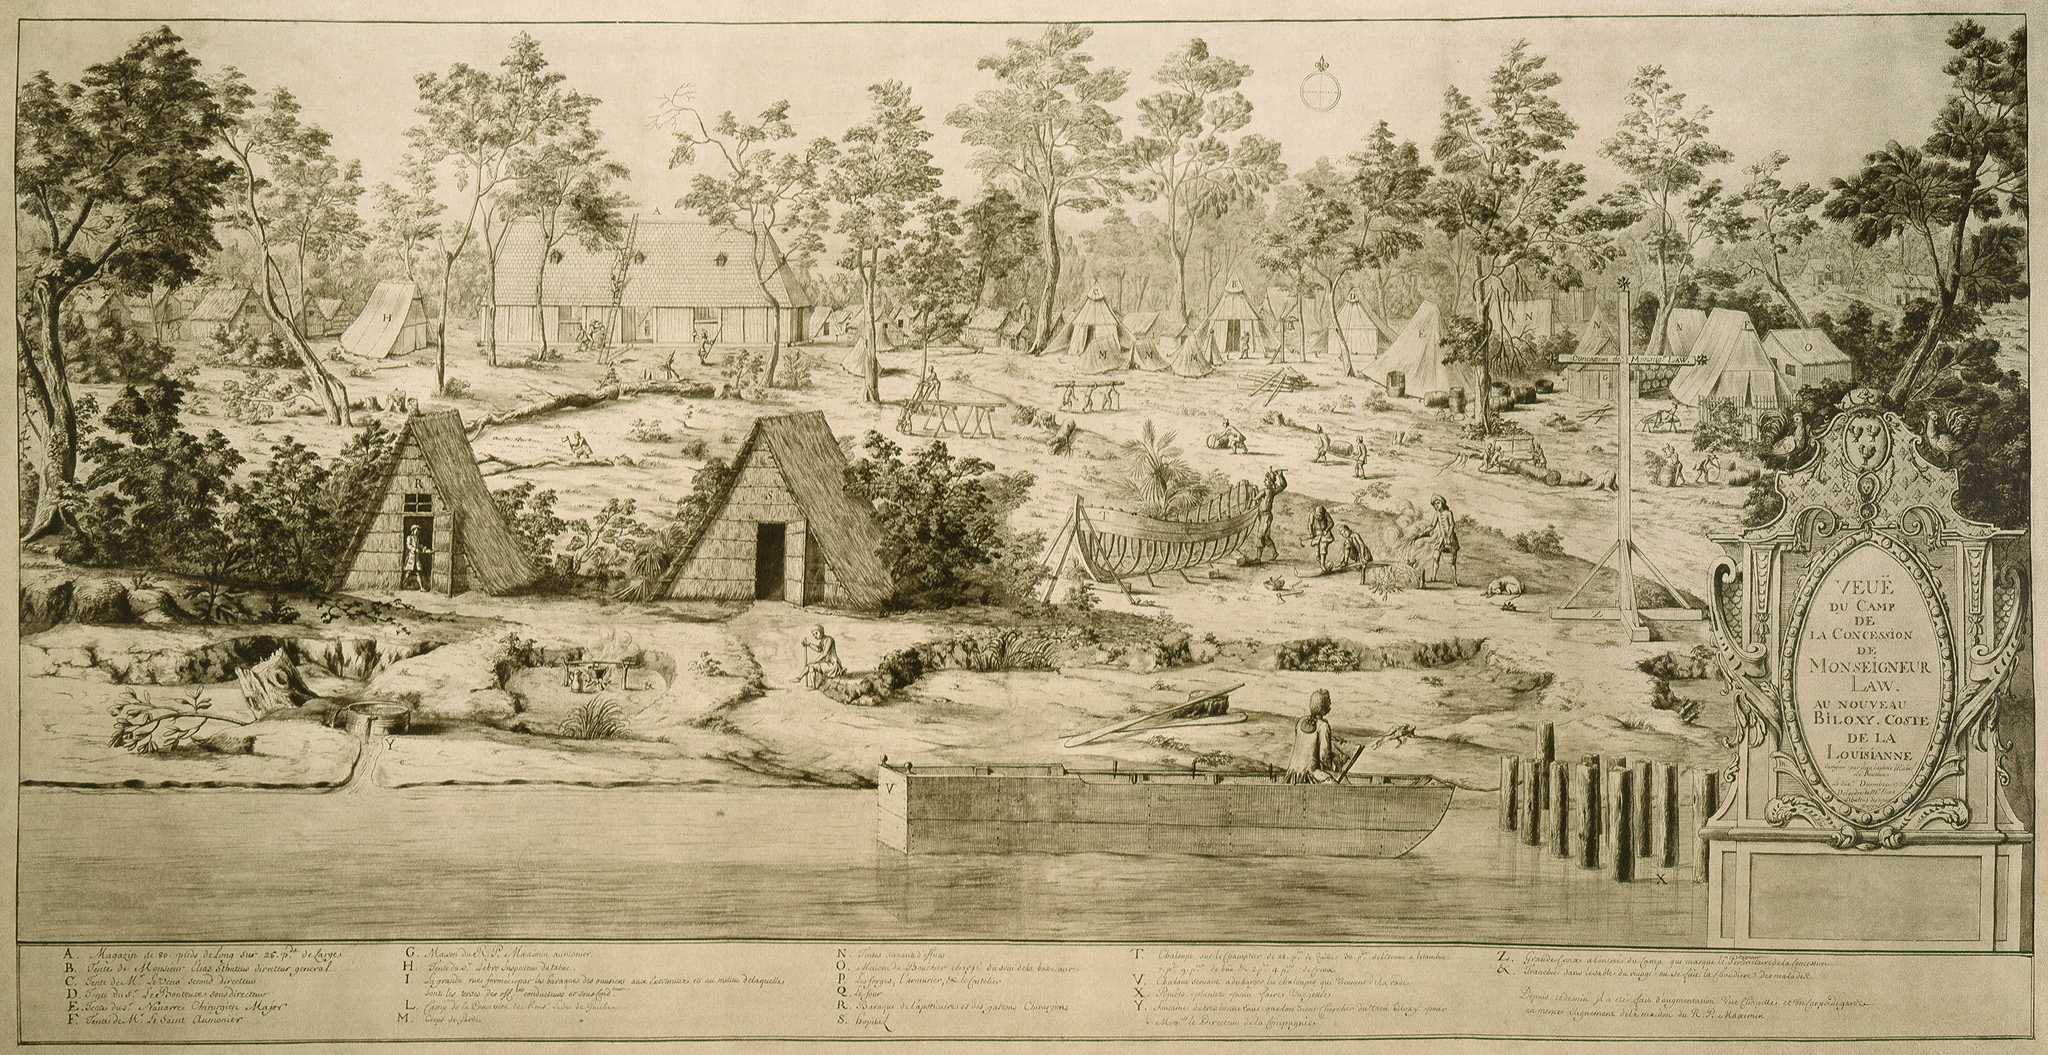 Sketch of camp along river